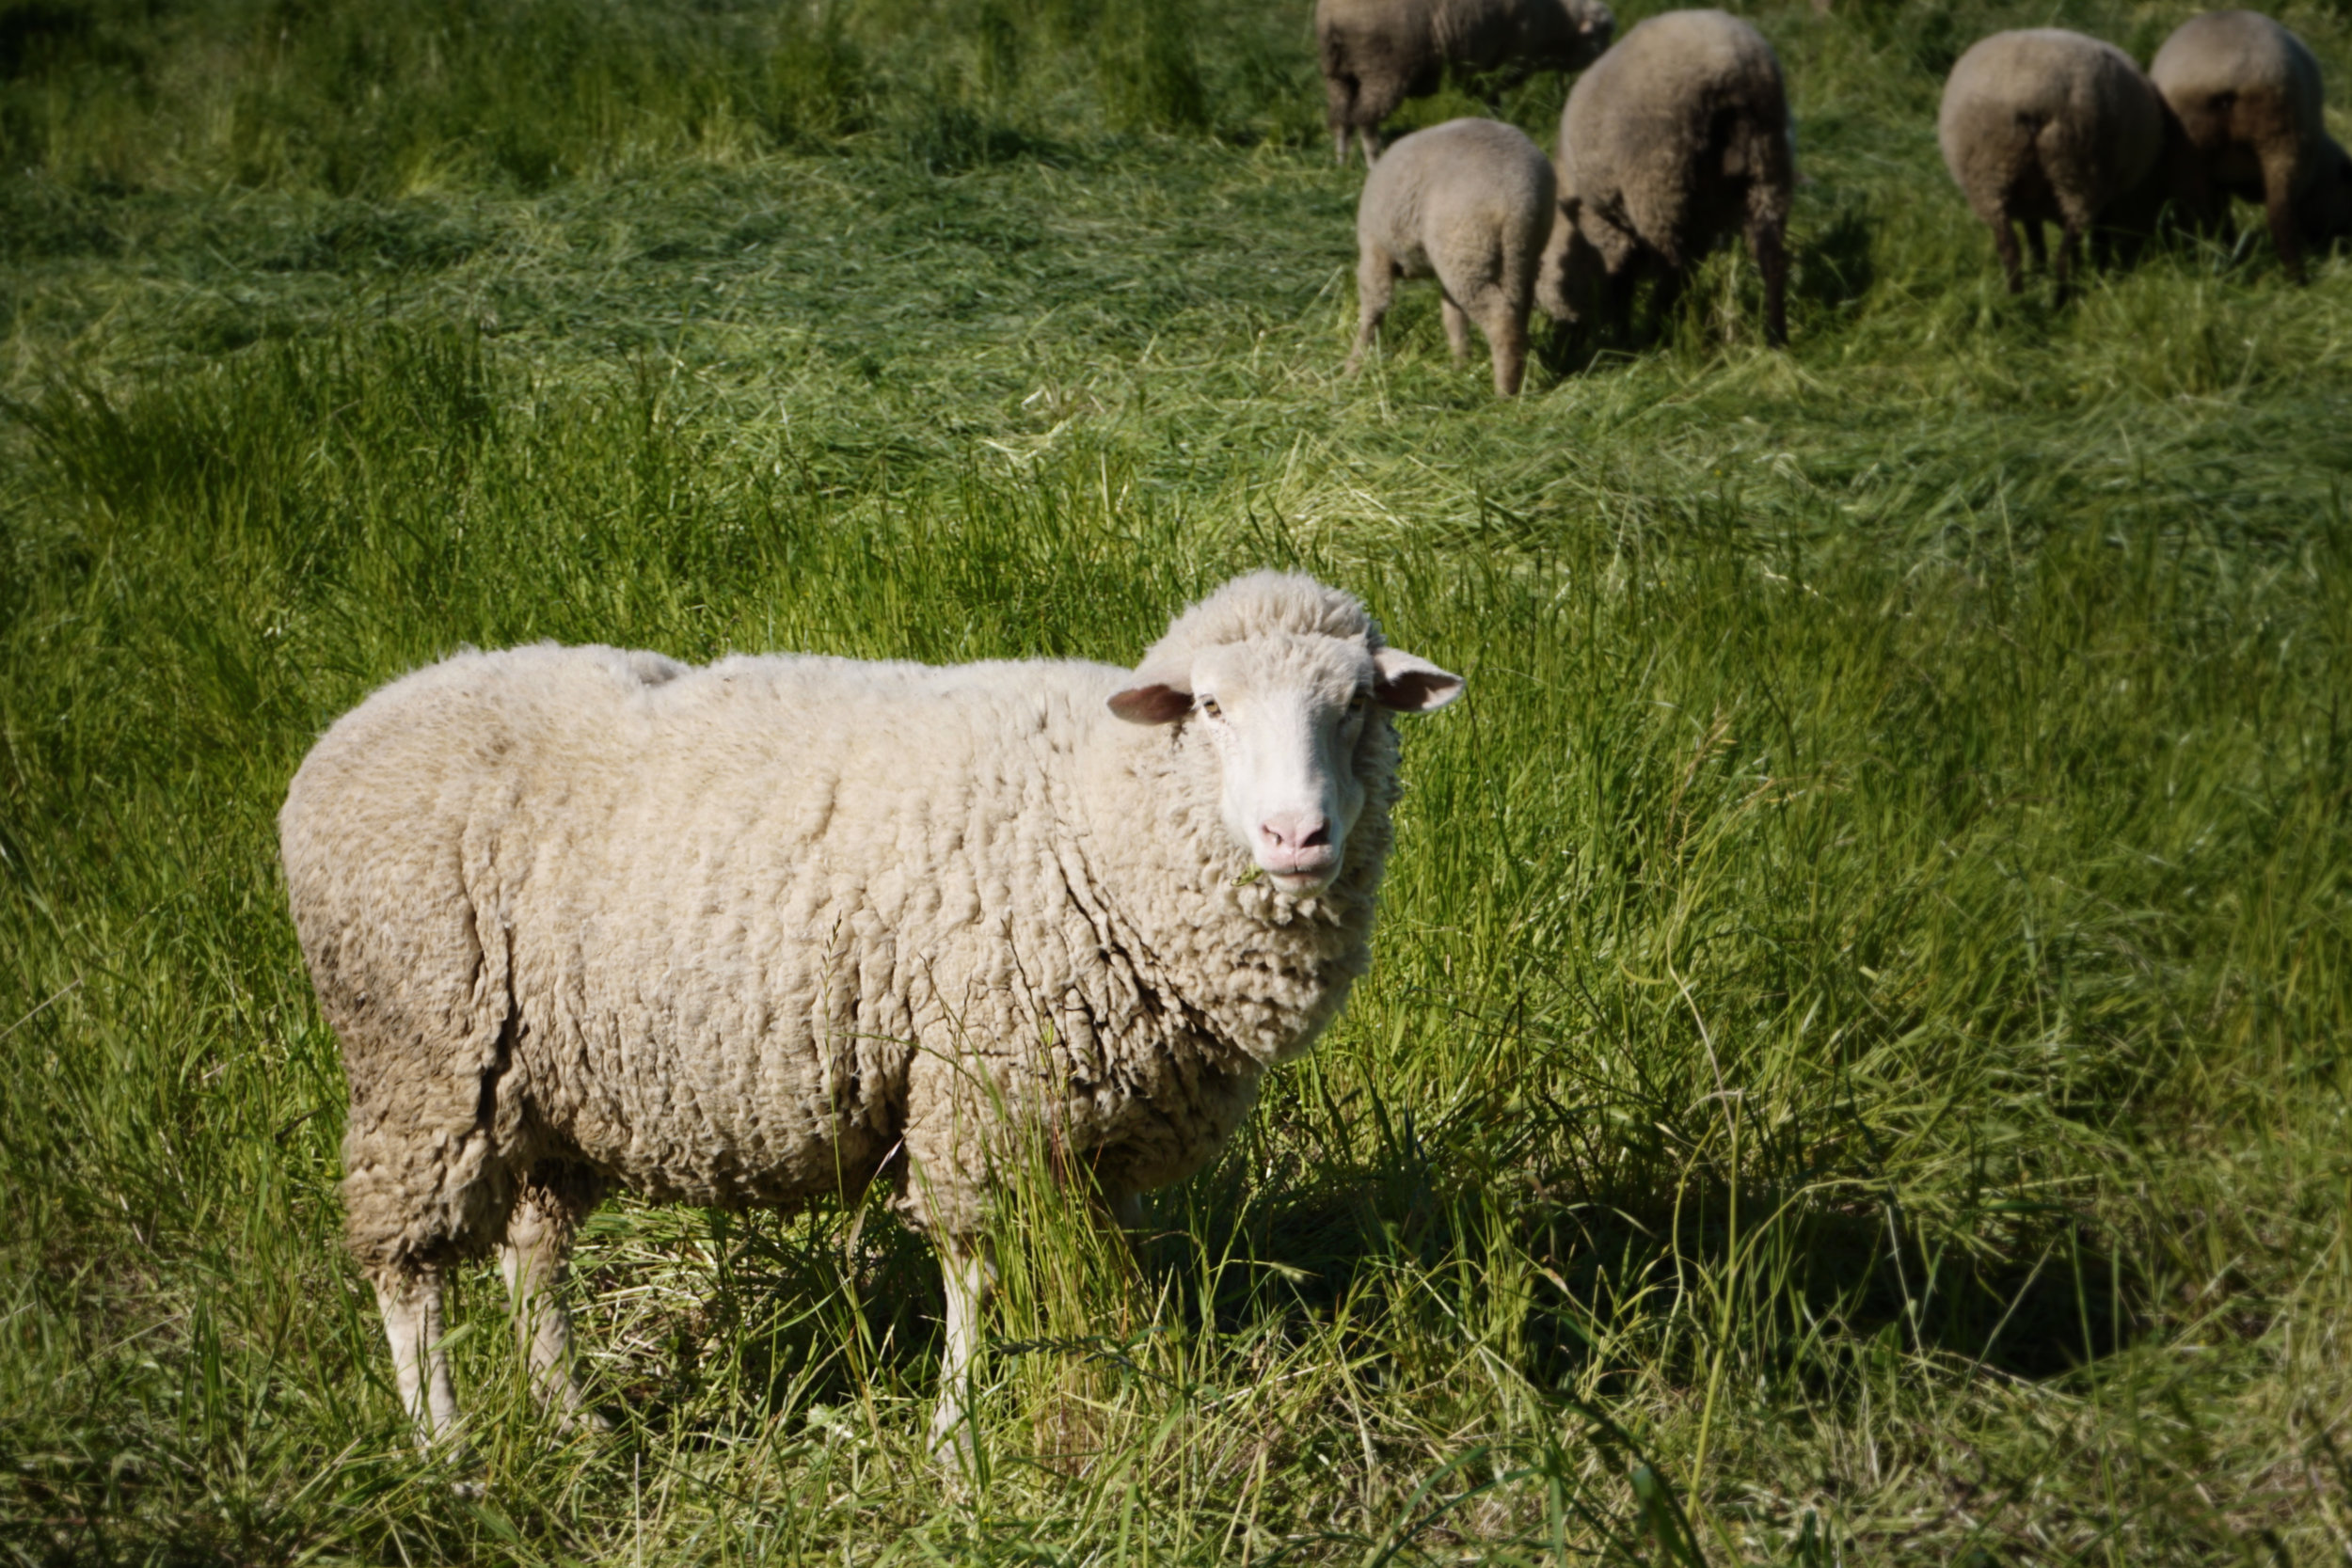 USA_California_Sonoma_Jacuzzi Family Vineyards_outside sheep.jpg